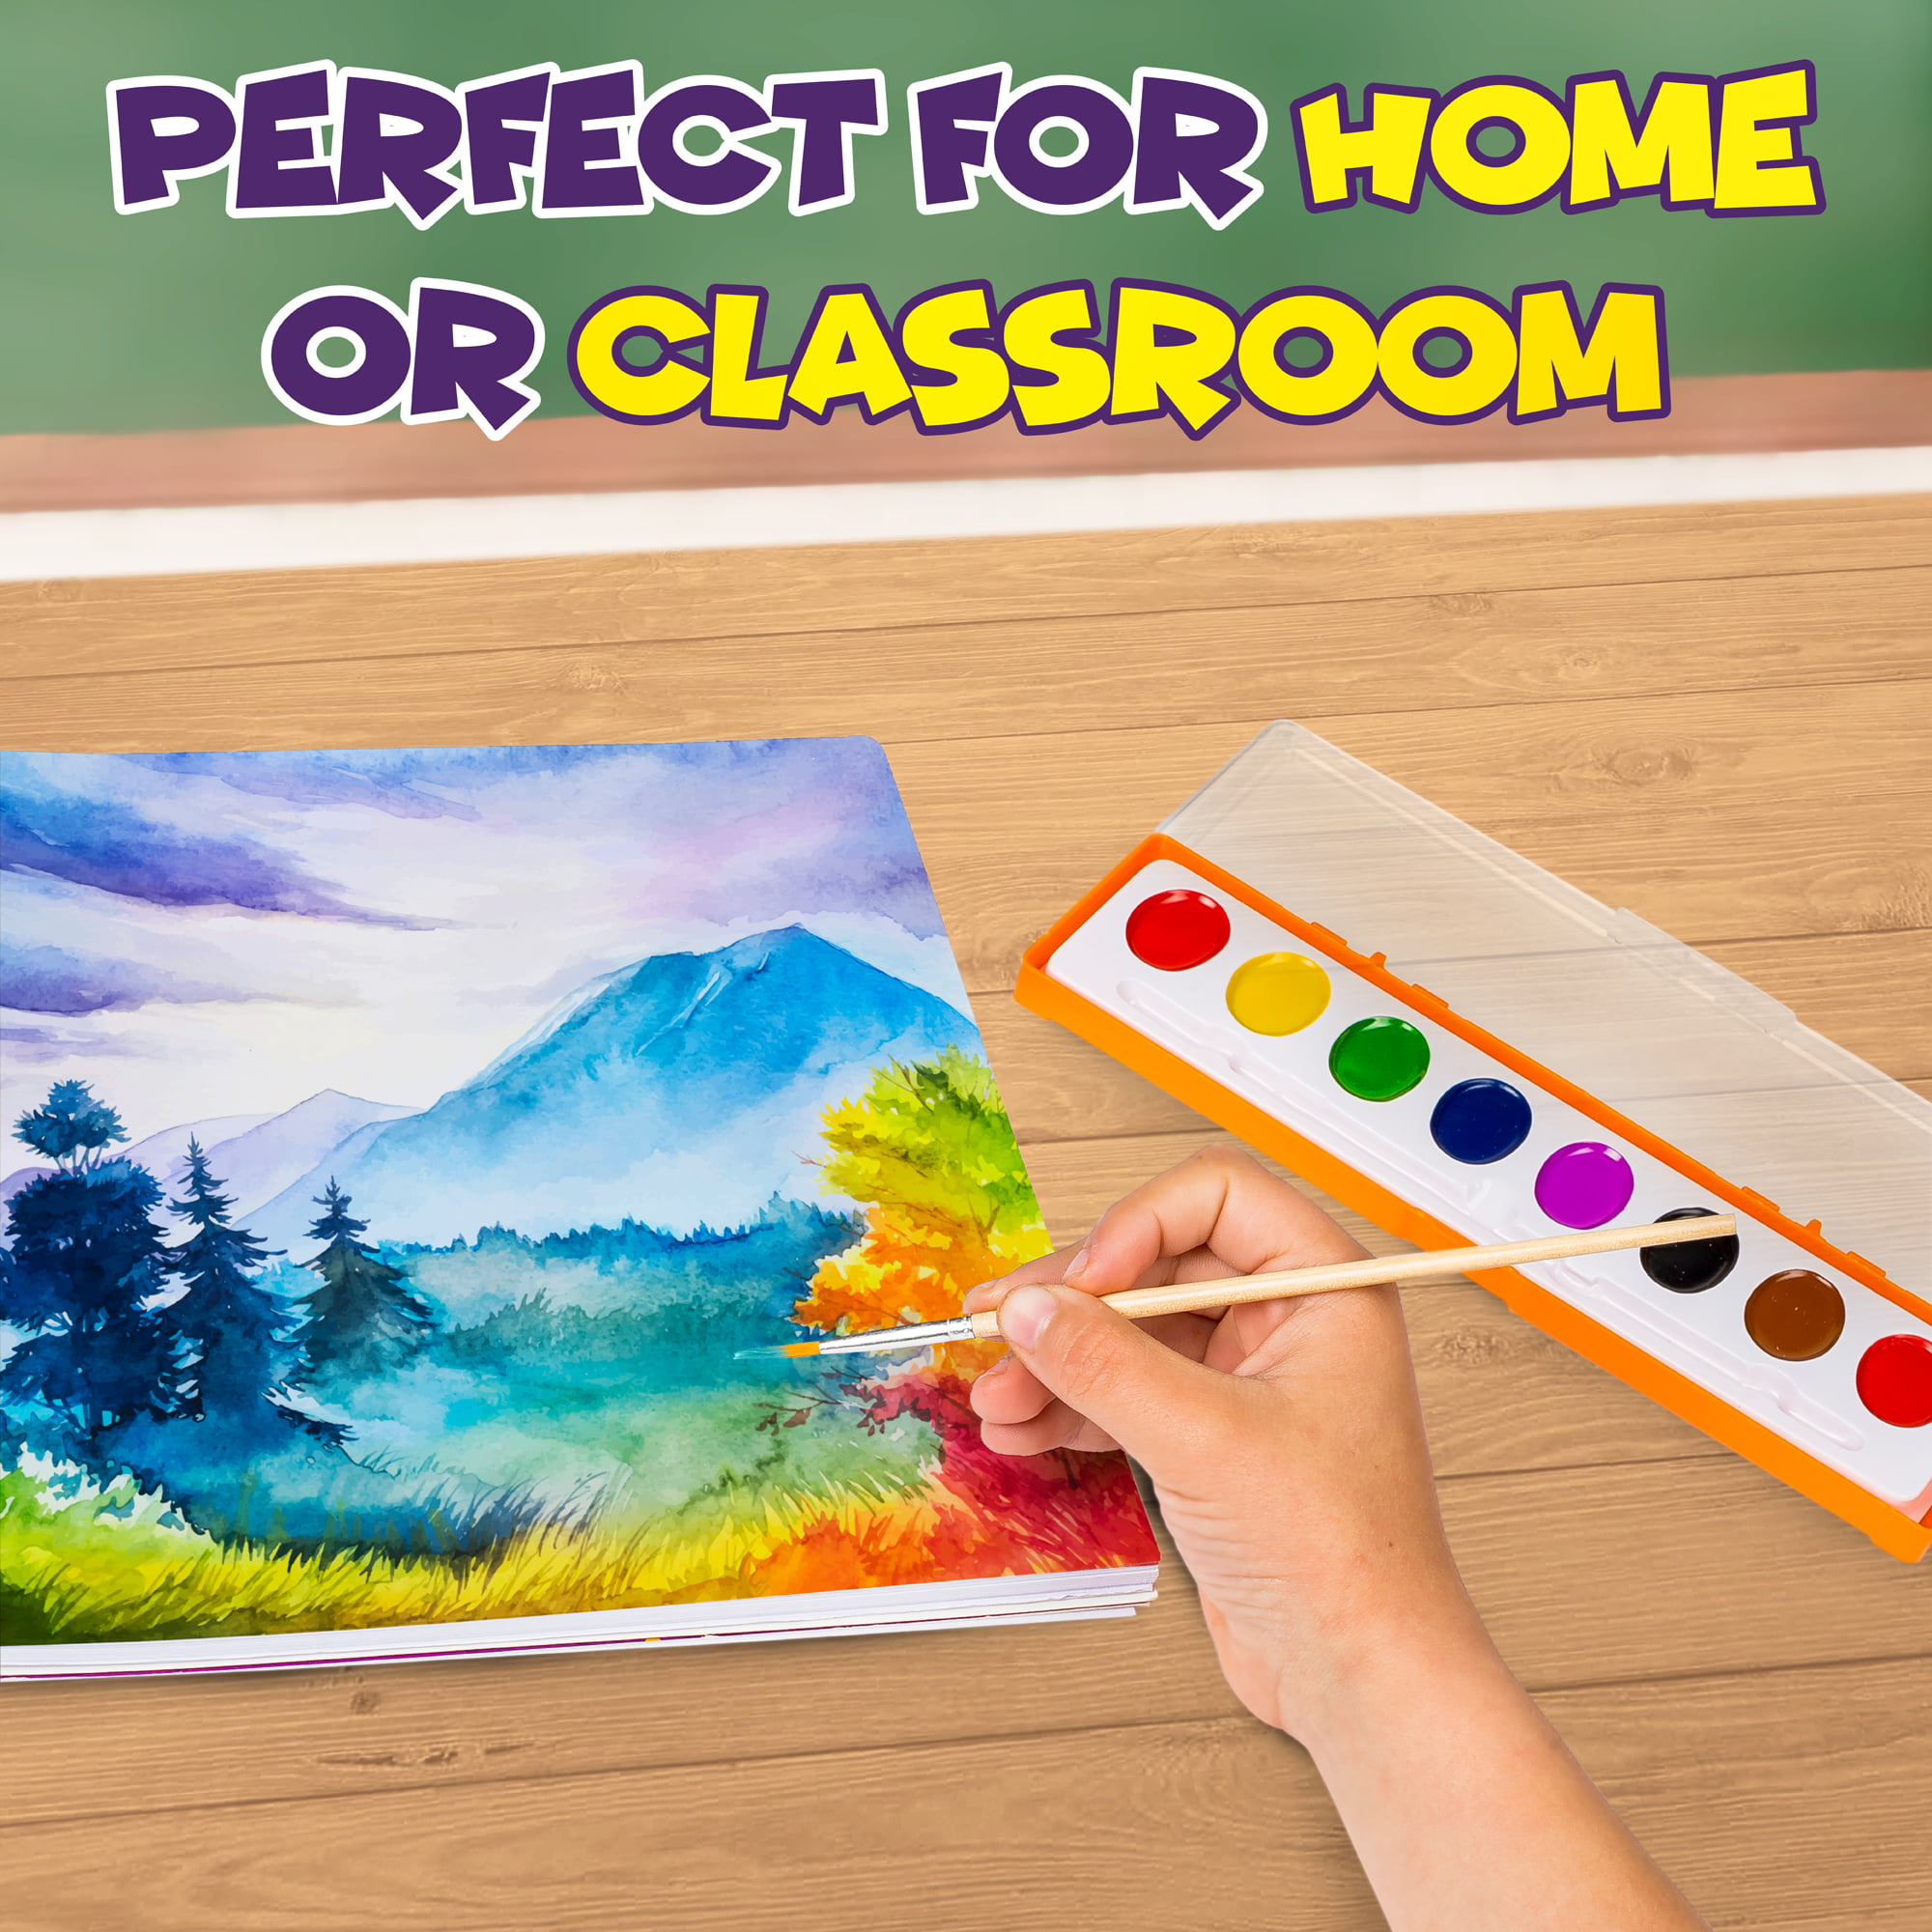 Creative Kids Bulk Watercolor Paint Classroom Classpack Sets – 40 Assorted  Palettes with 8 Color Paints & Wooden Brush for Party Favors Preschool,  Kindergarten, School & Art Crafts Supplies 